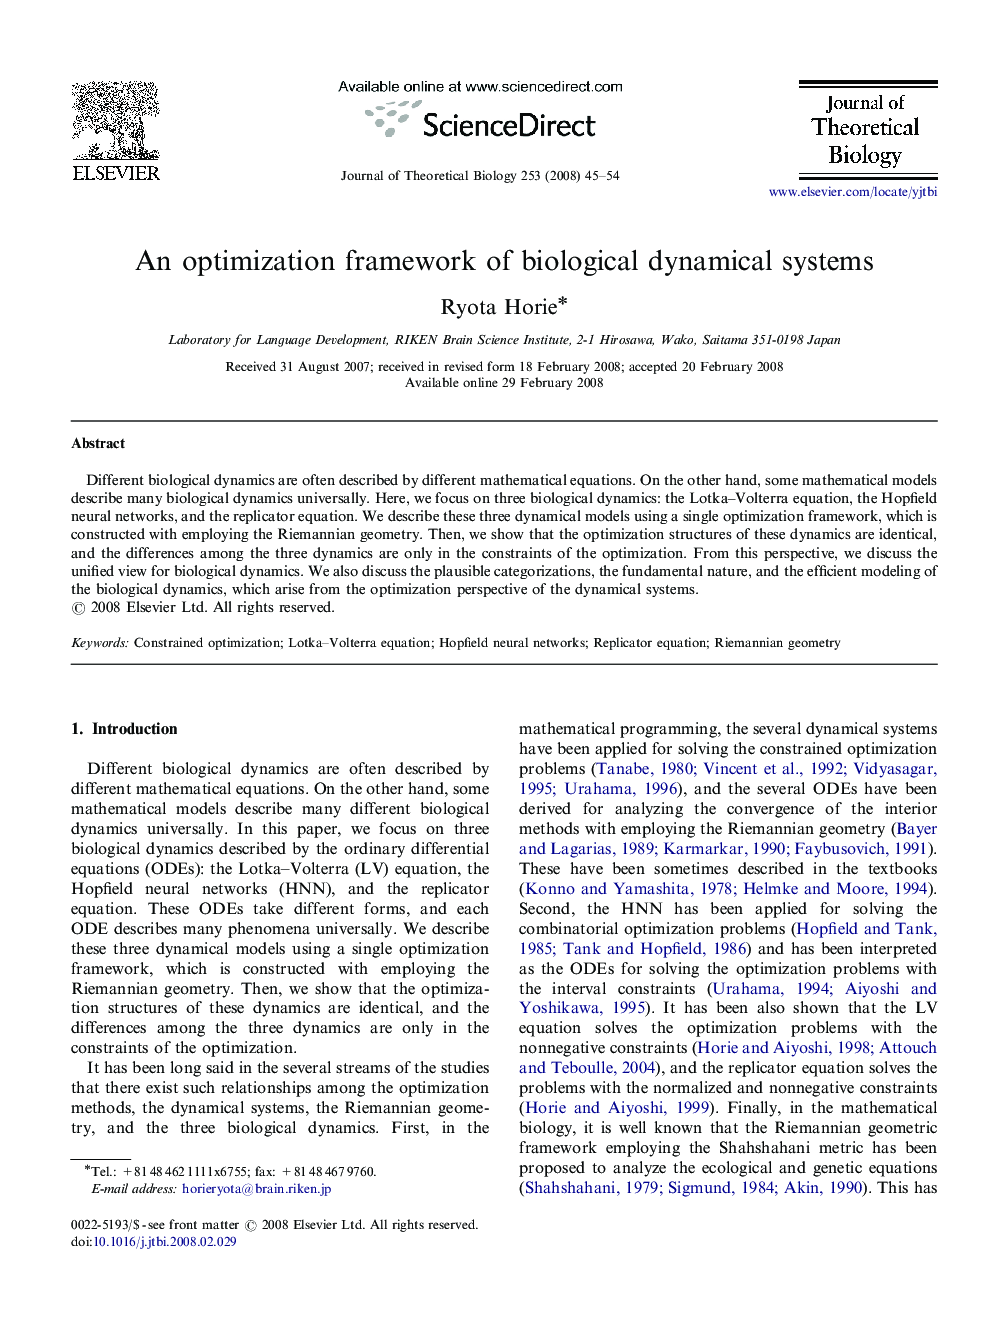 An optimization framework of biological dynamical systems